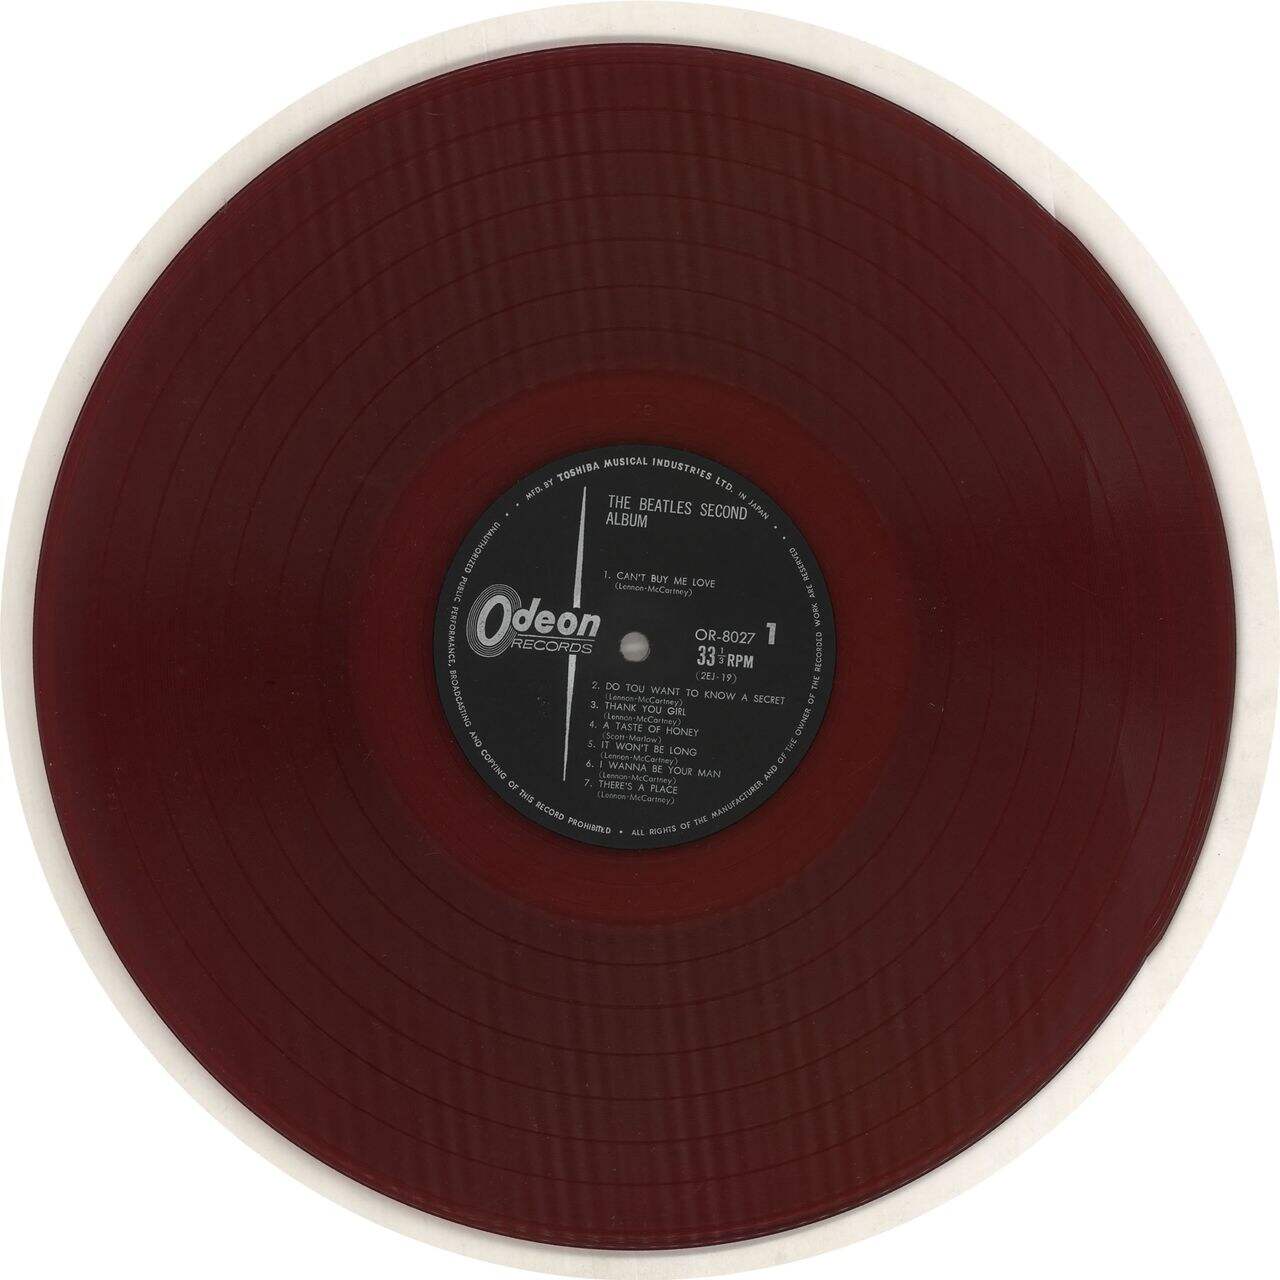 The Beatles The Beatles' Second Album - 2nd Odeon - Red Wax + Obi Japanese Vinyl LP